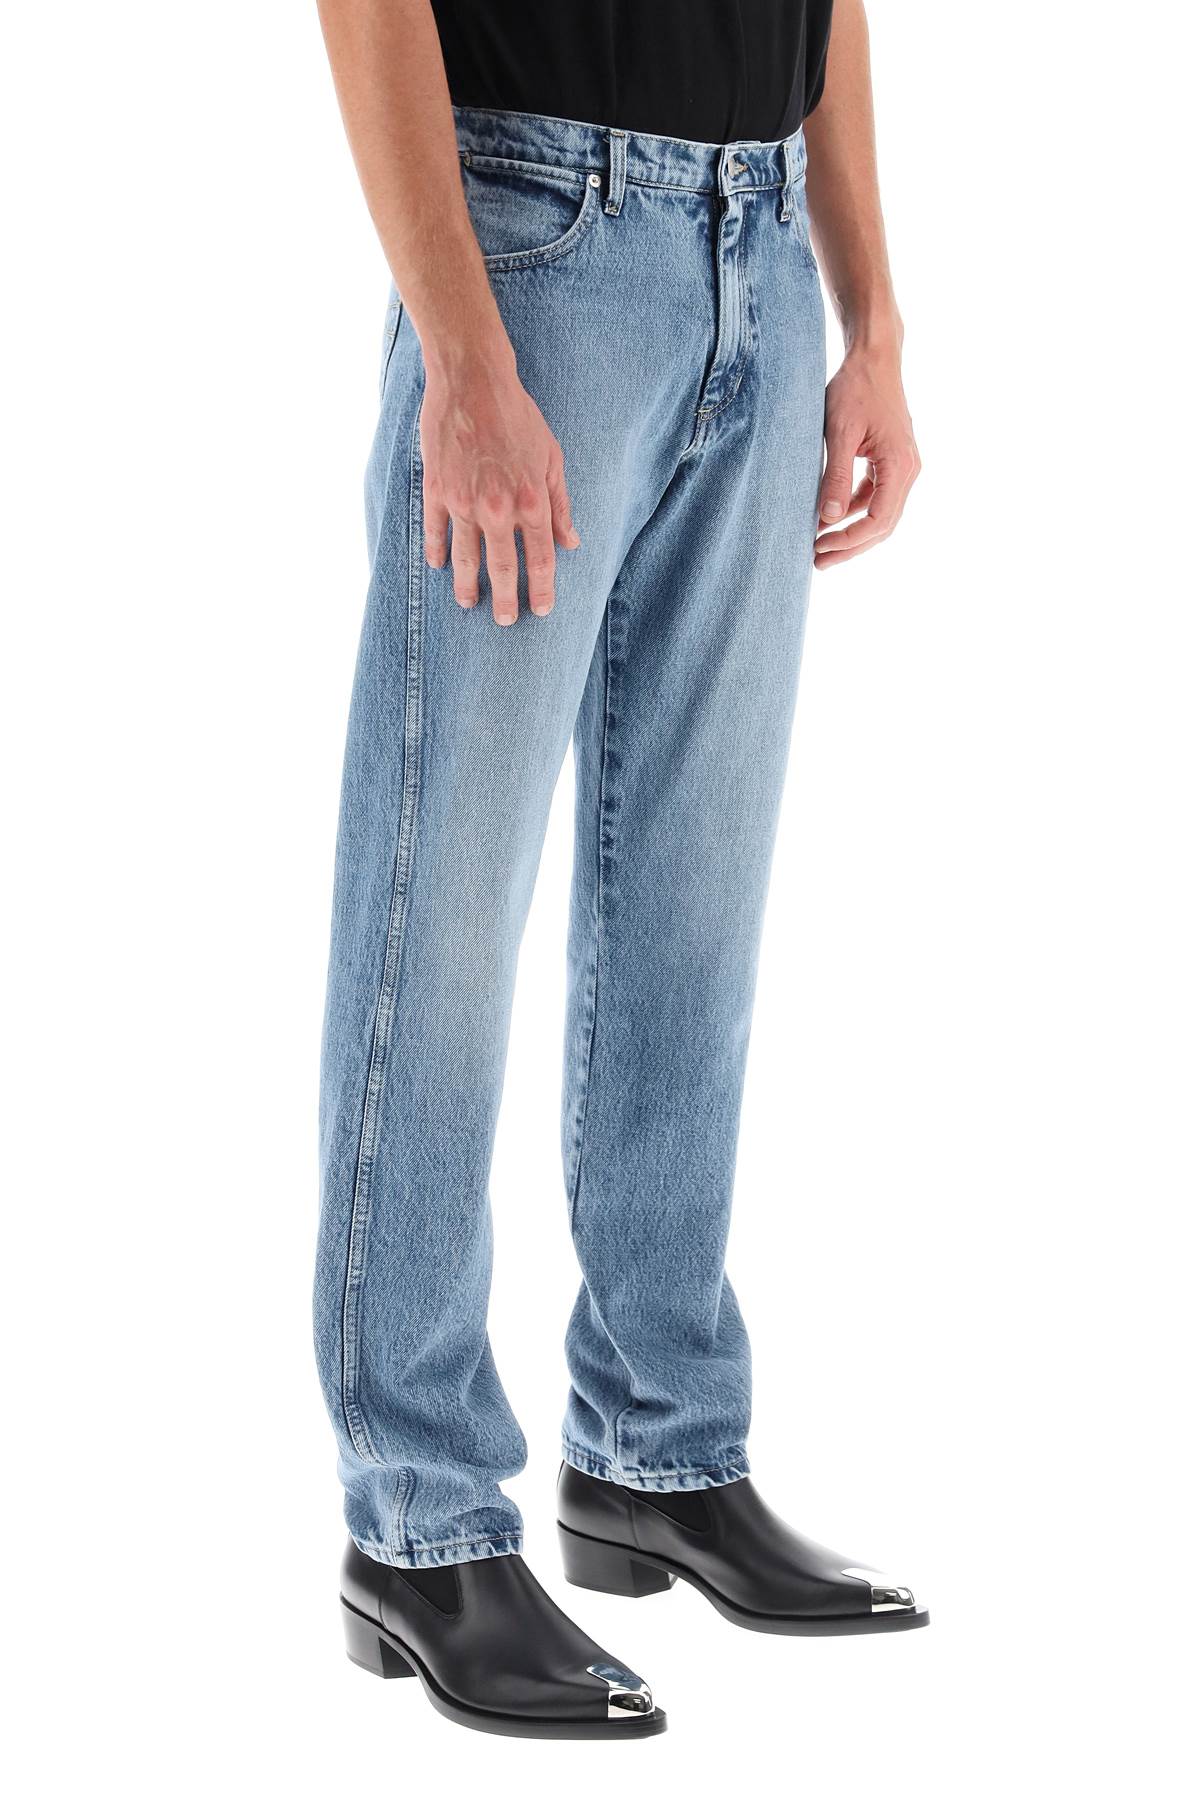 Bally straight cut jeans-1